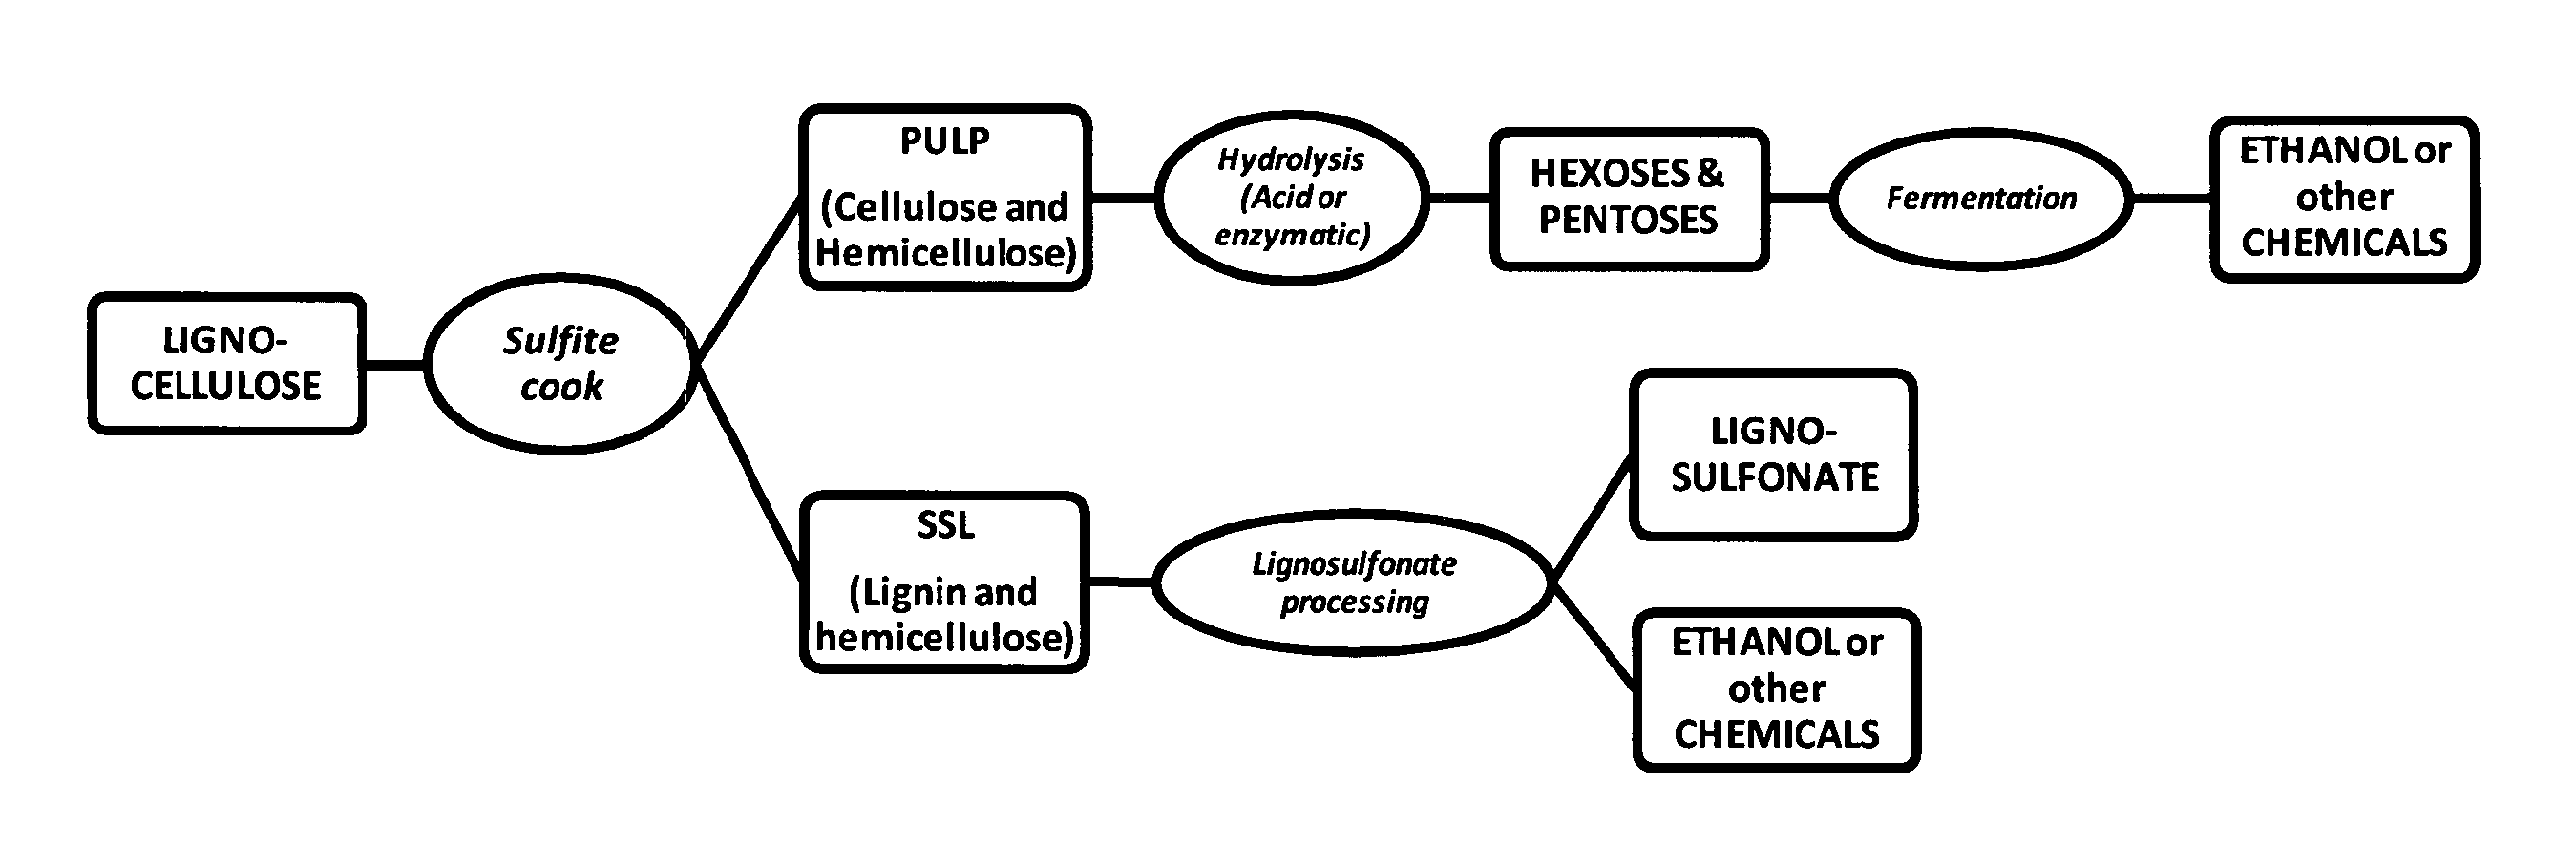 Lignocellulosic biomass conversion